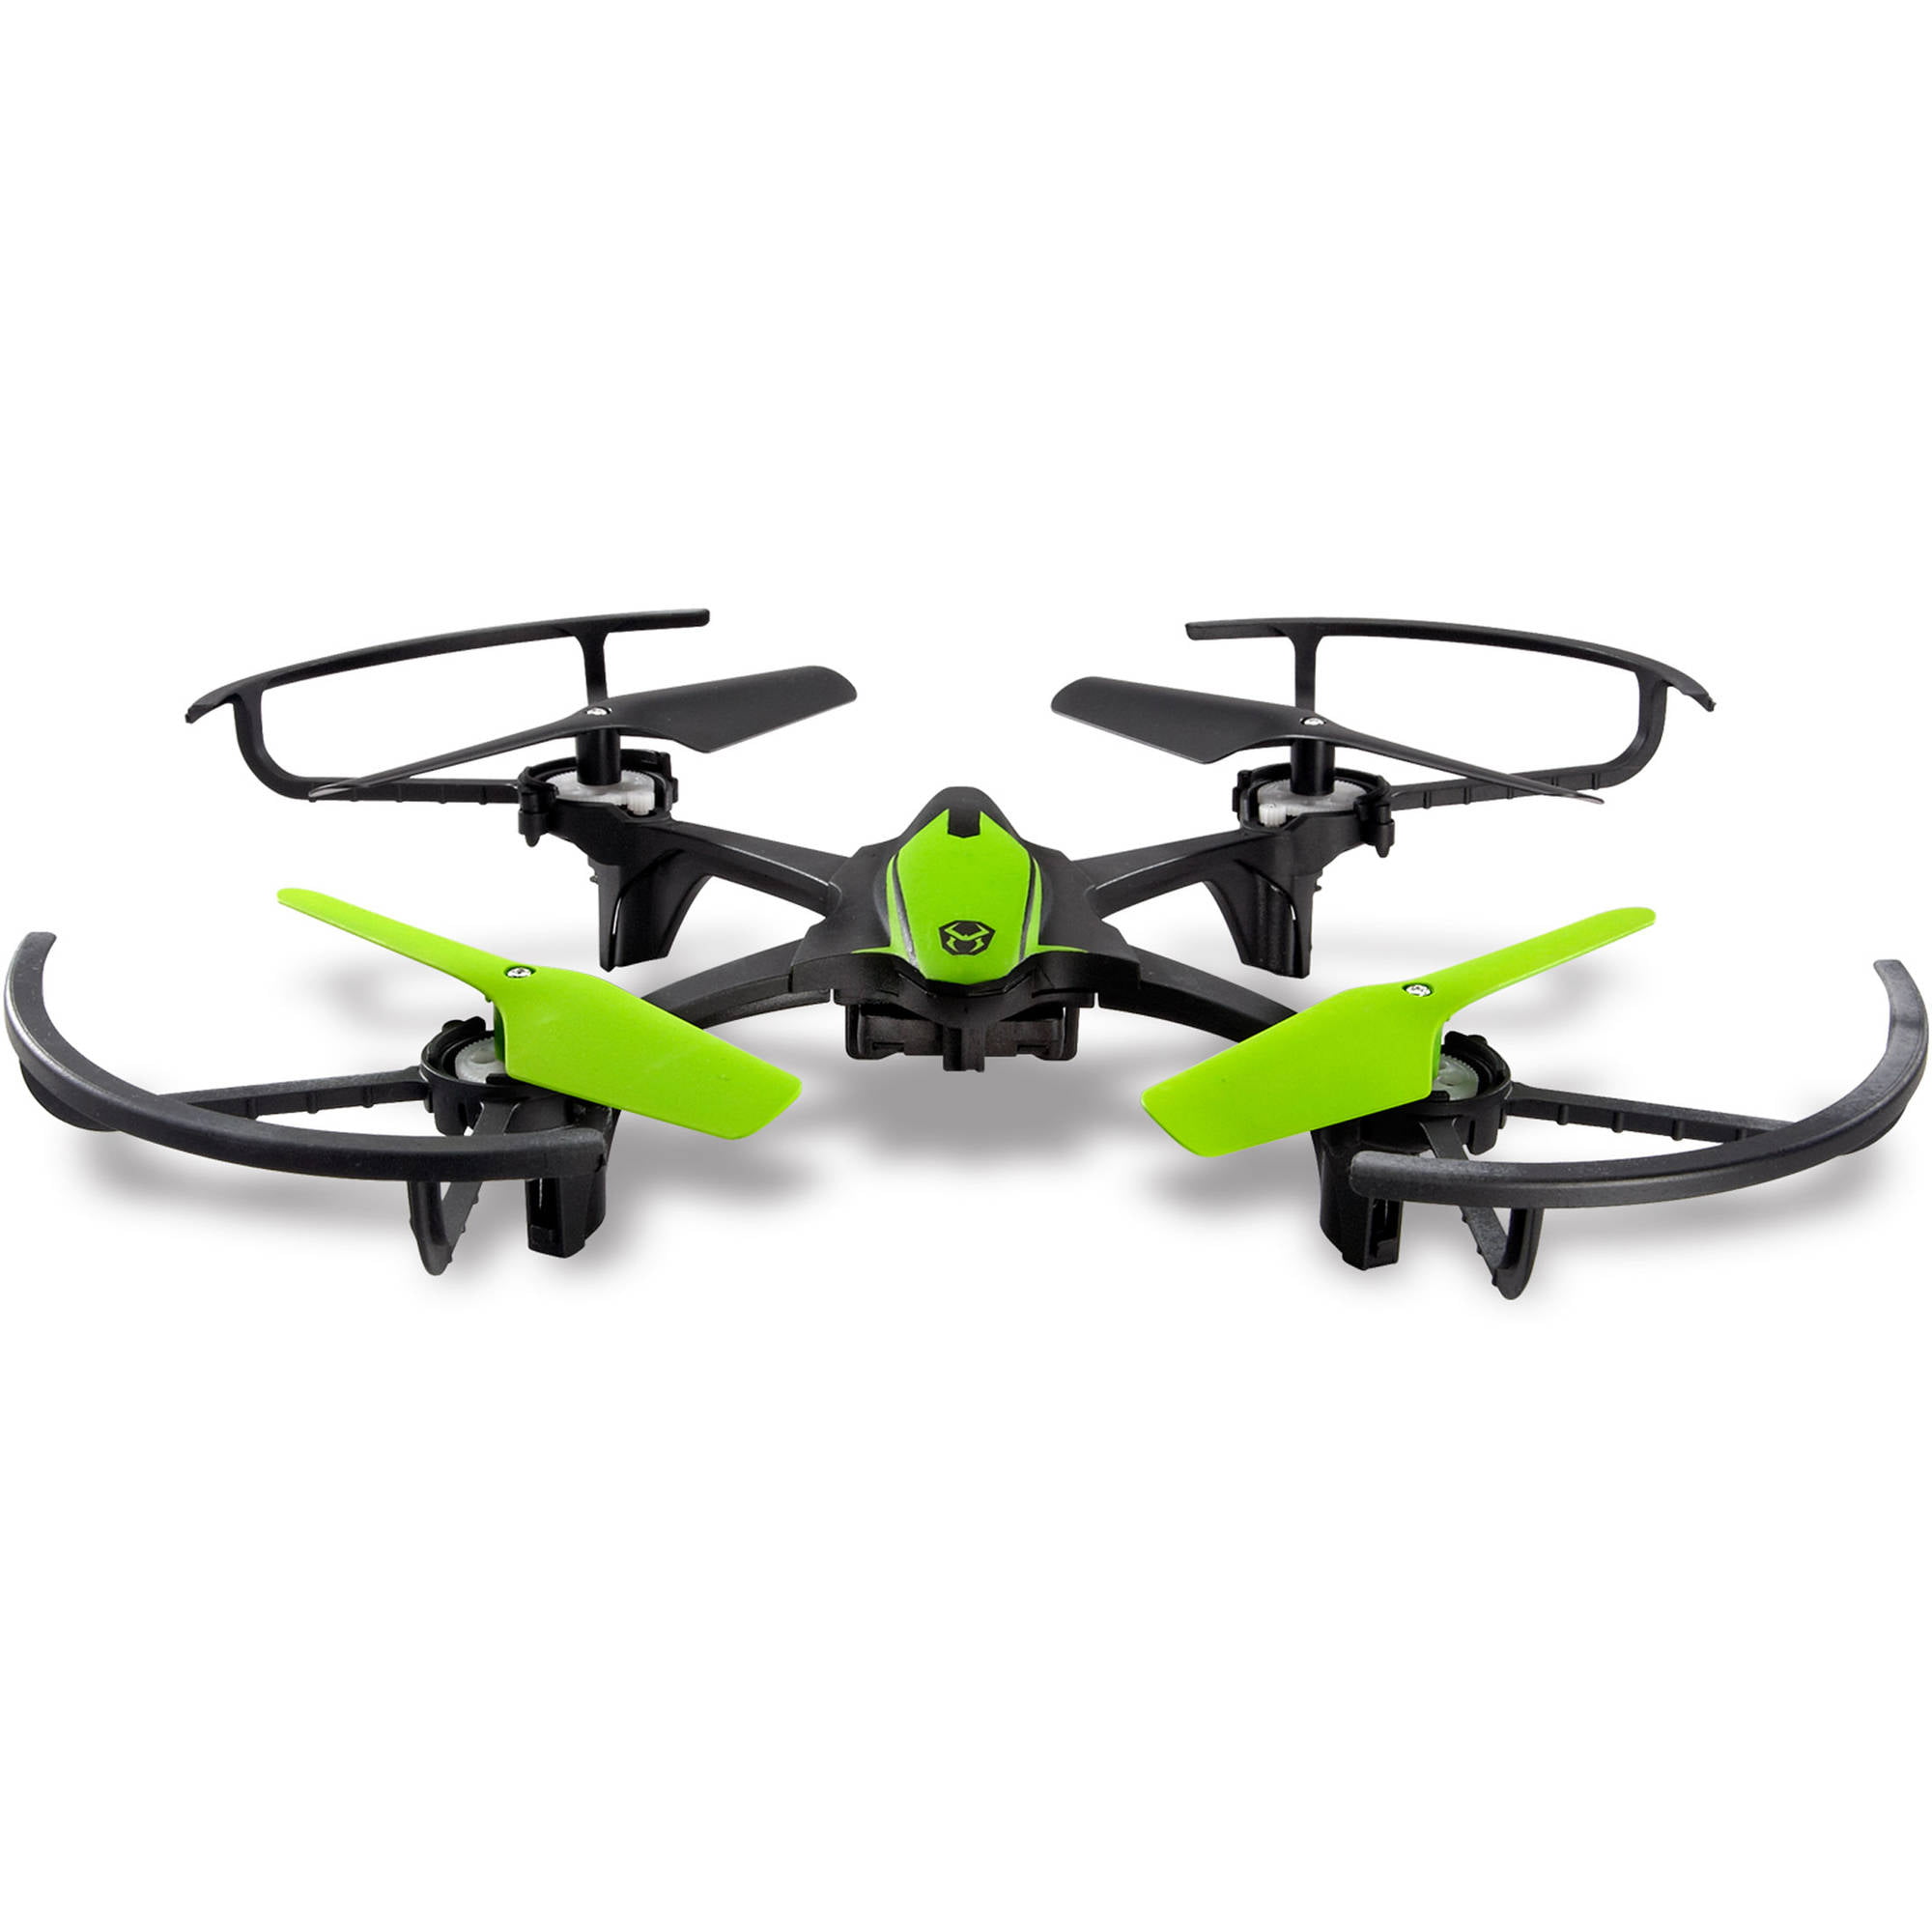 Sky Viper 2016 S1700 Stunt Drone Wm9 M01 for sale online 